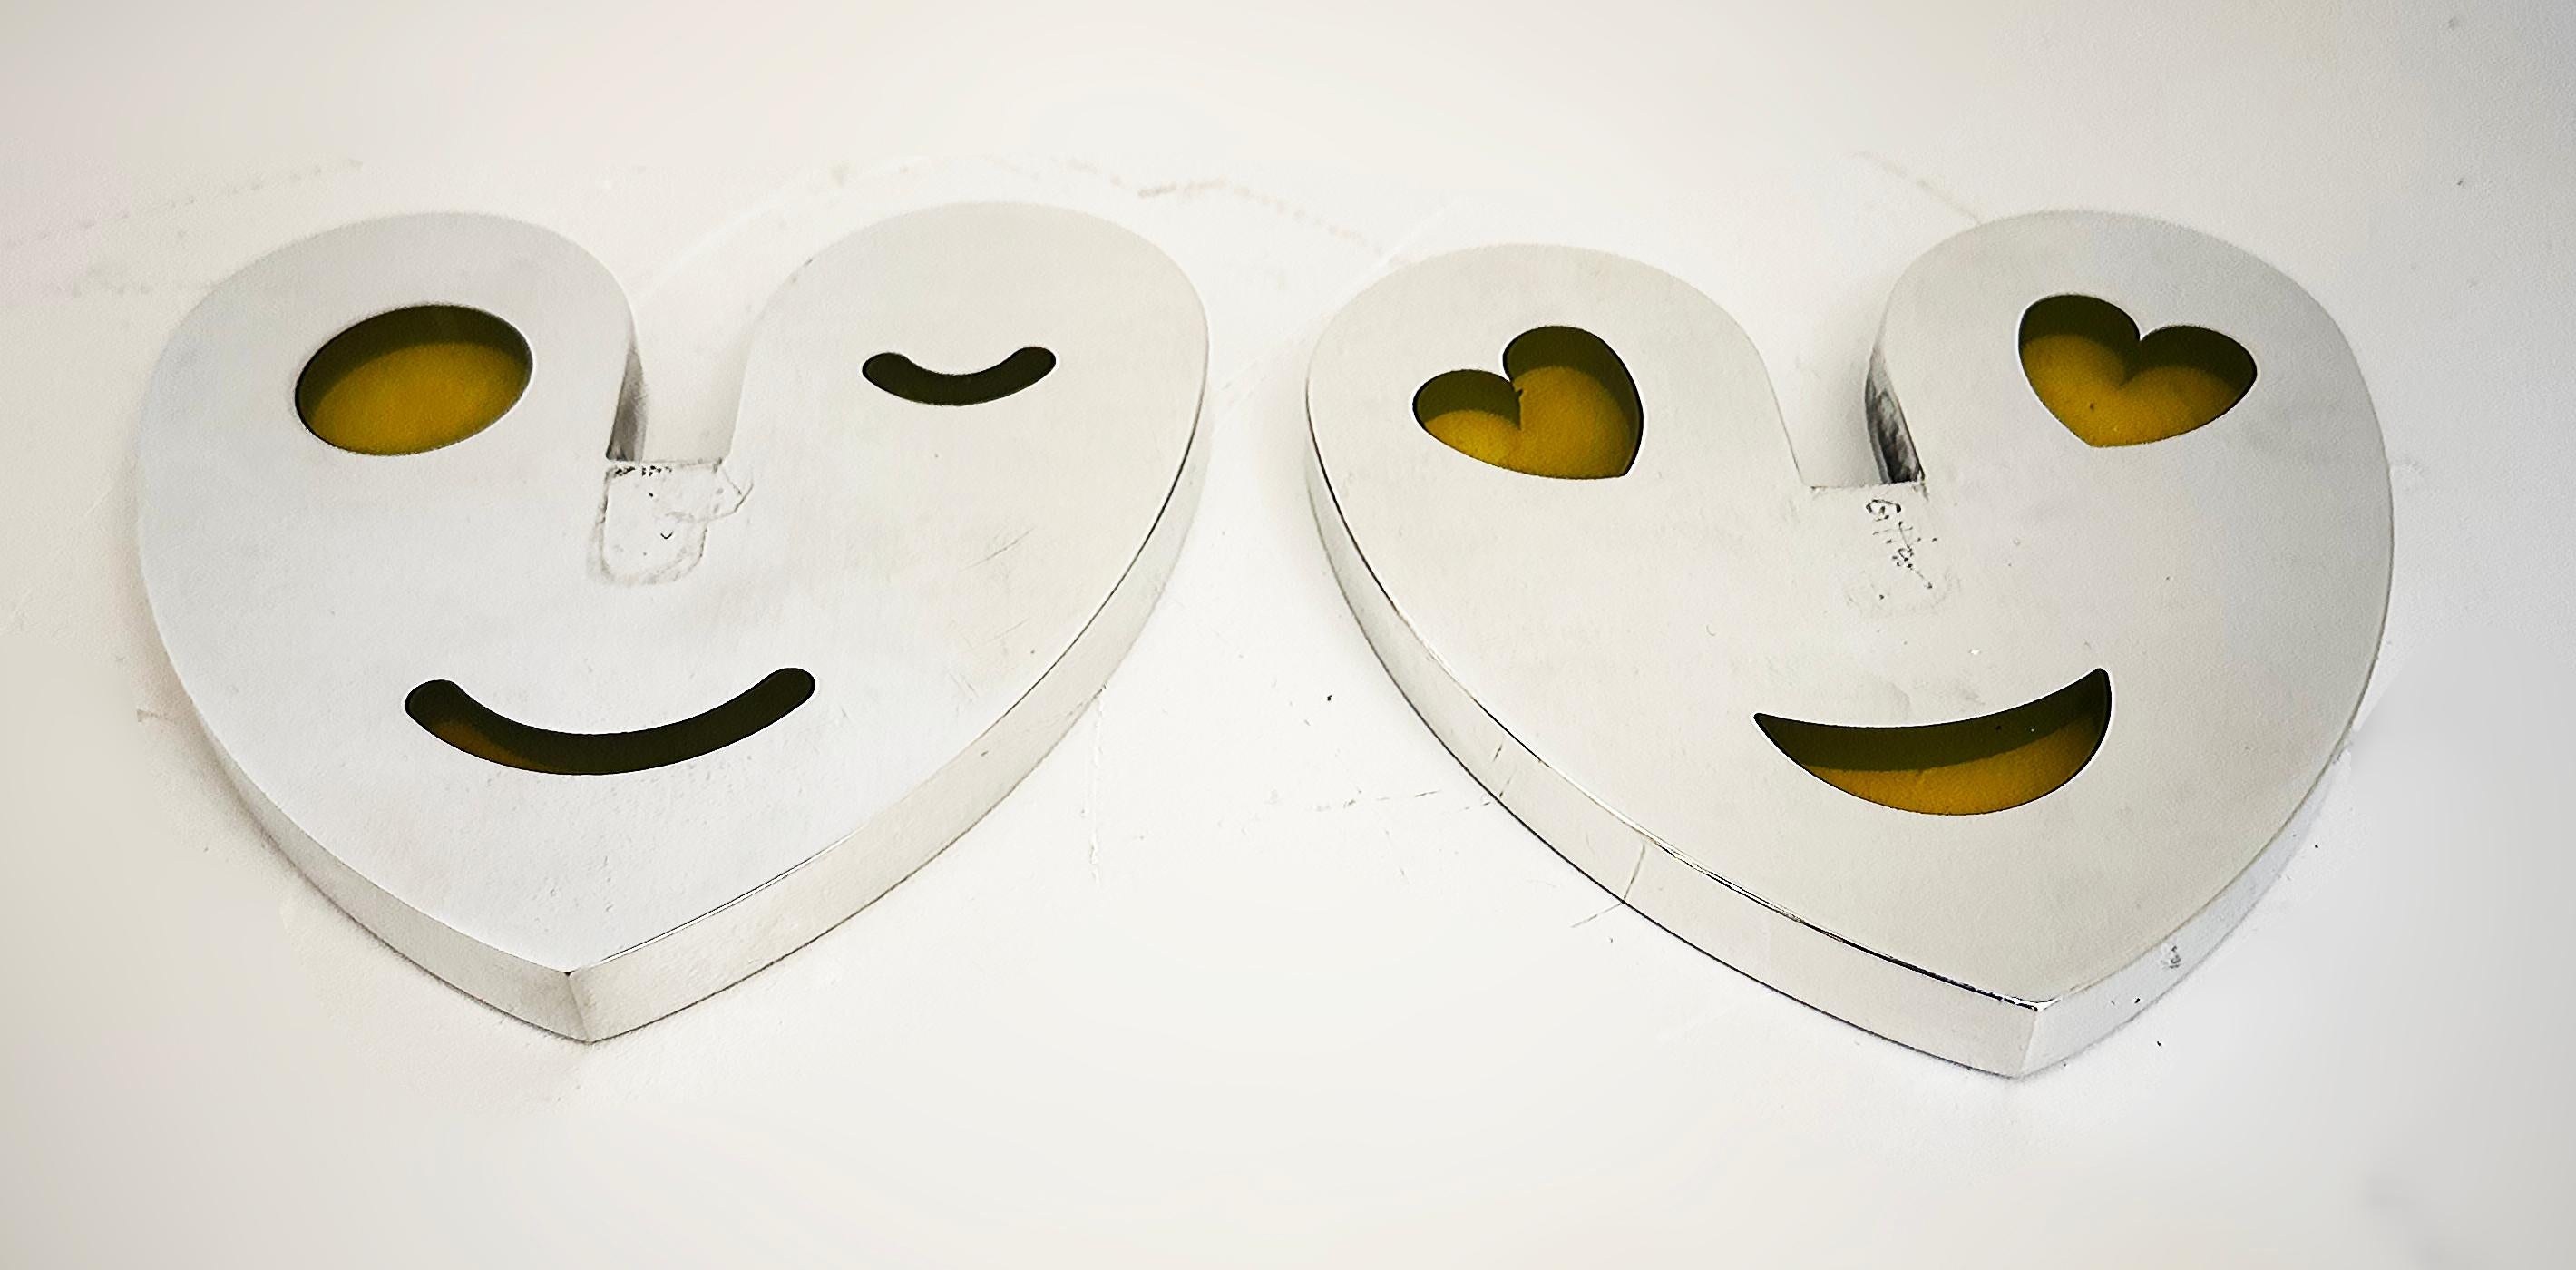   Aluminum, Epoxy Resin Interlocking Hearts Sculpture by Michael Gitter For Sale 2